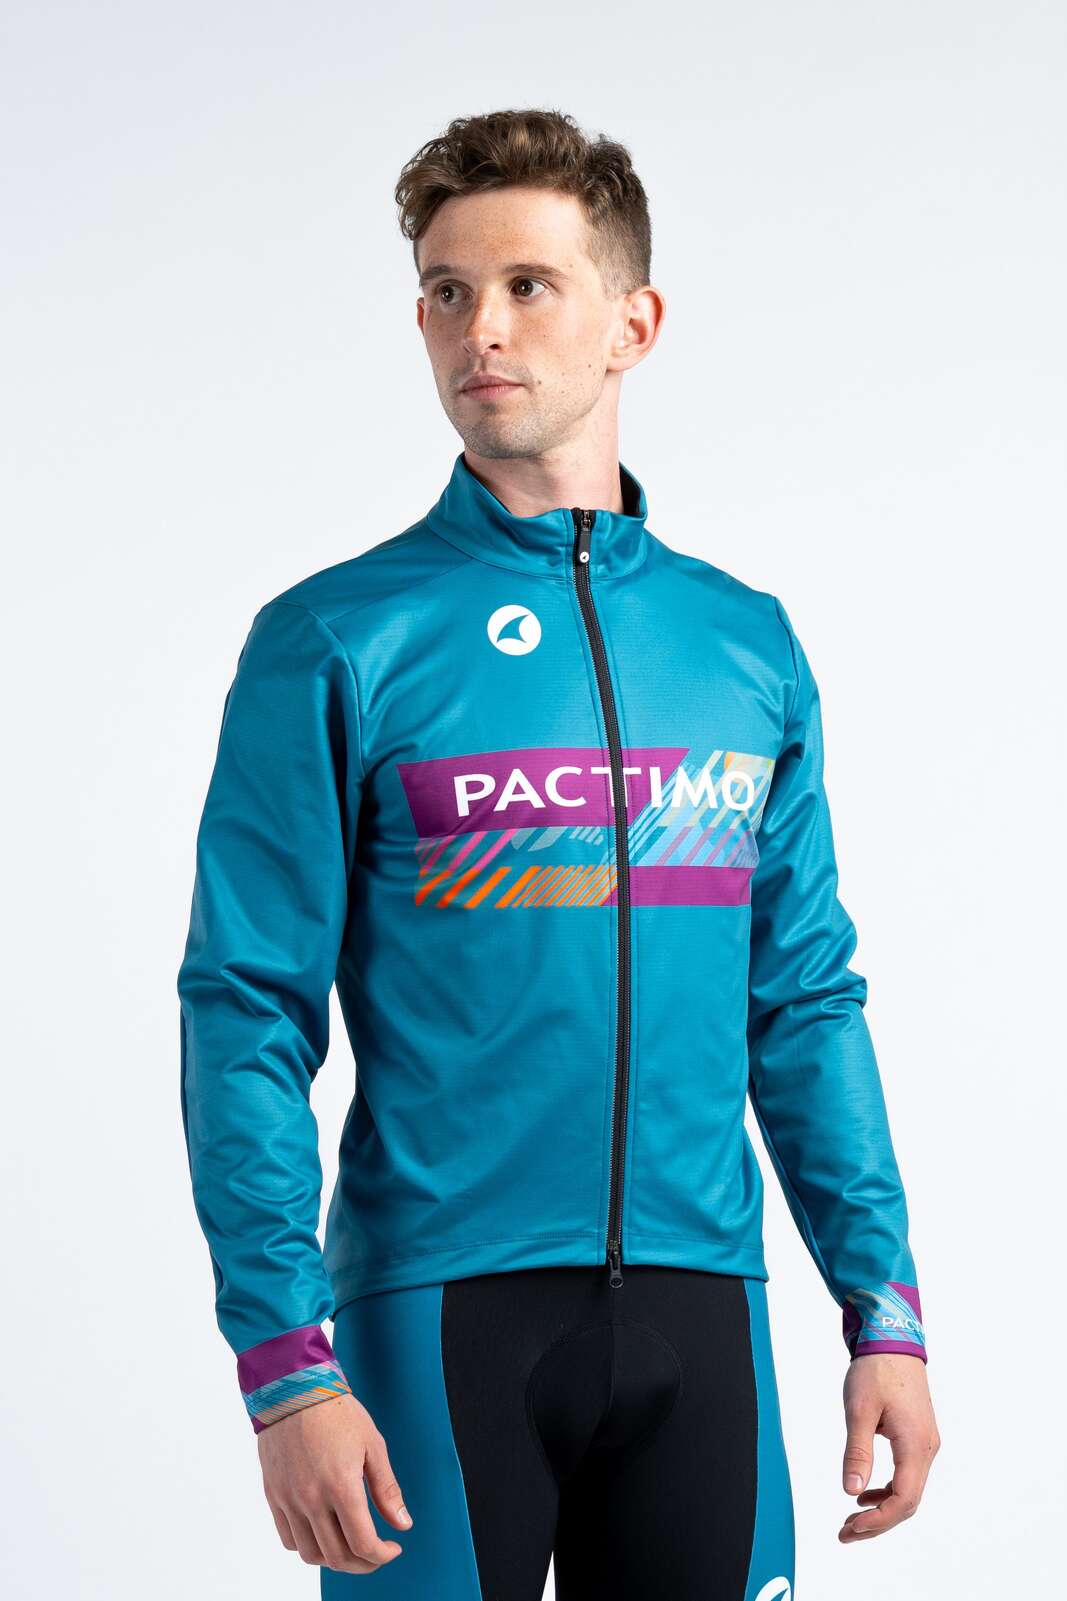 Men's Custom Cycling Jacket for Winter